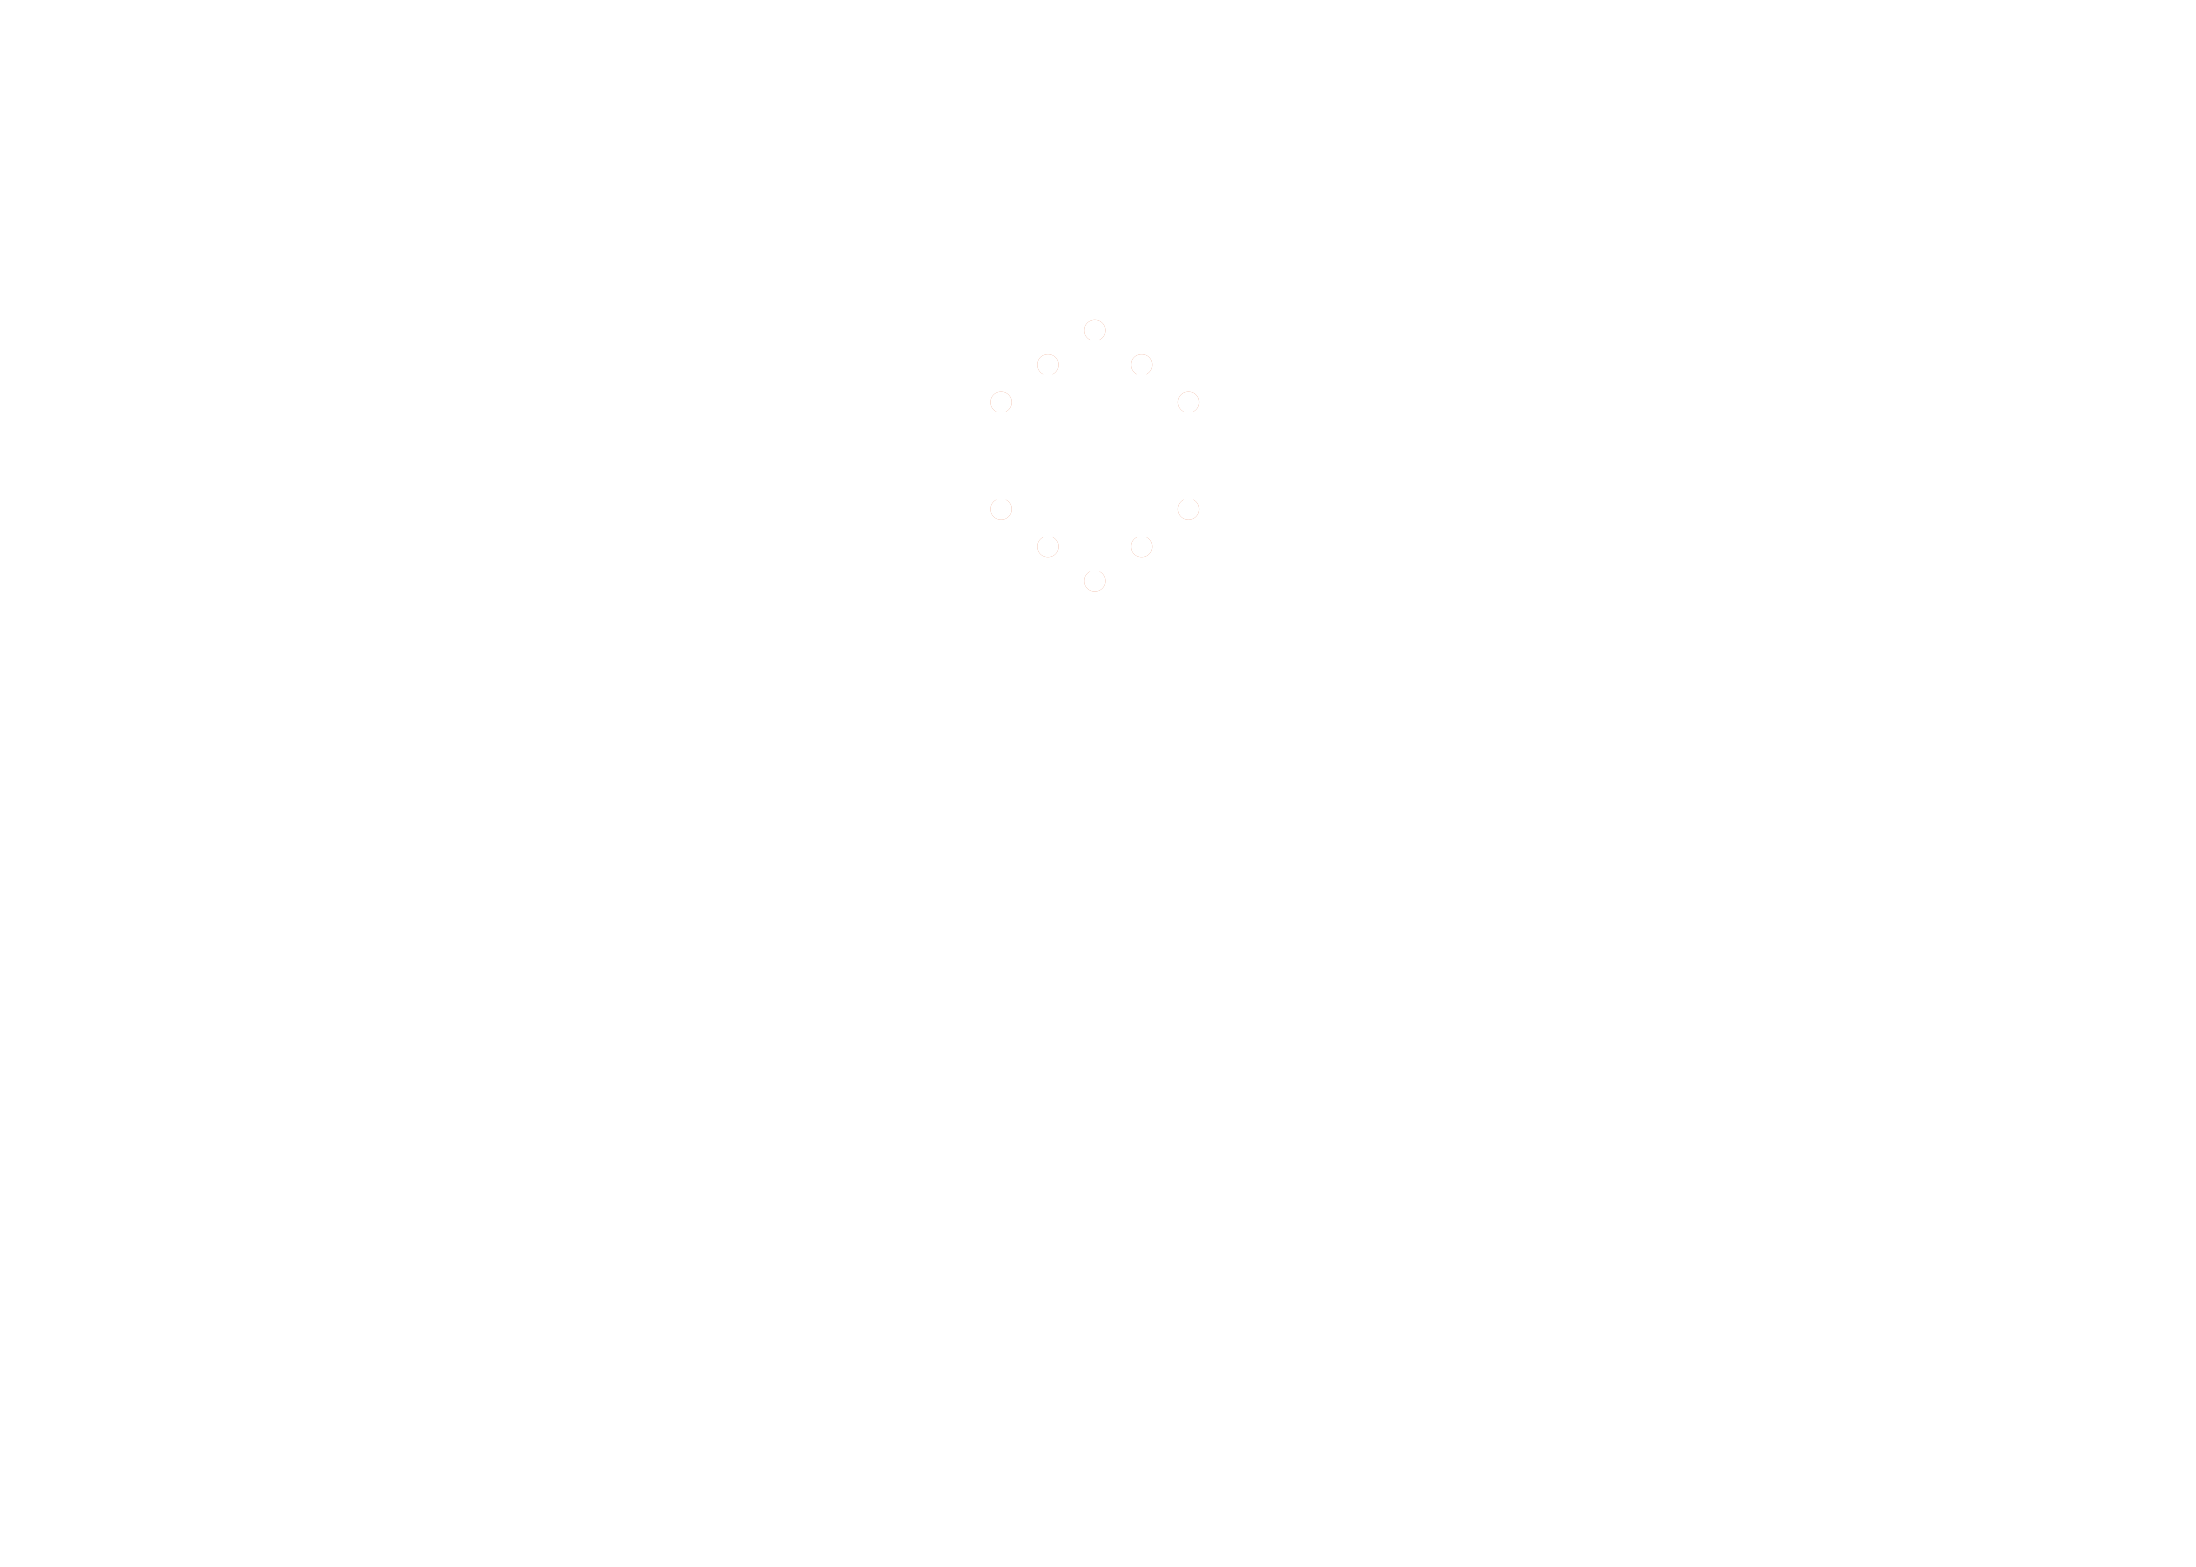 Logotipo da Enterprise Data Services Platform